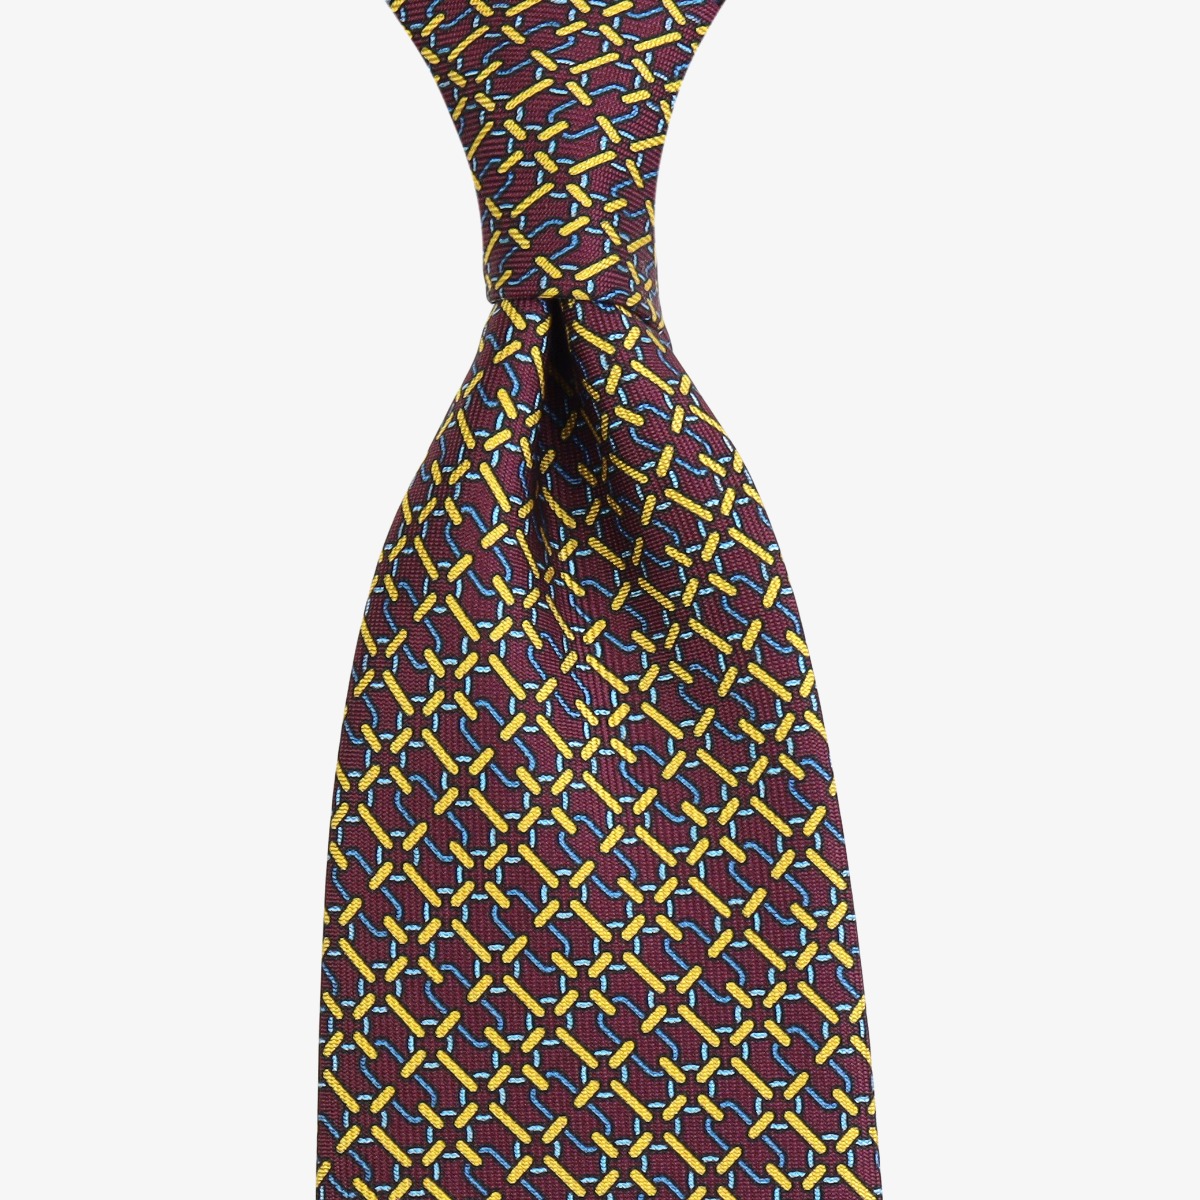 Shibumi Firenze burgundy silk tie with chain pattern